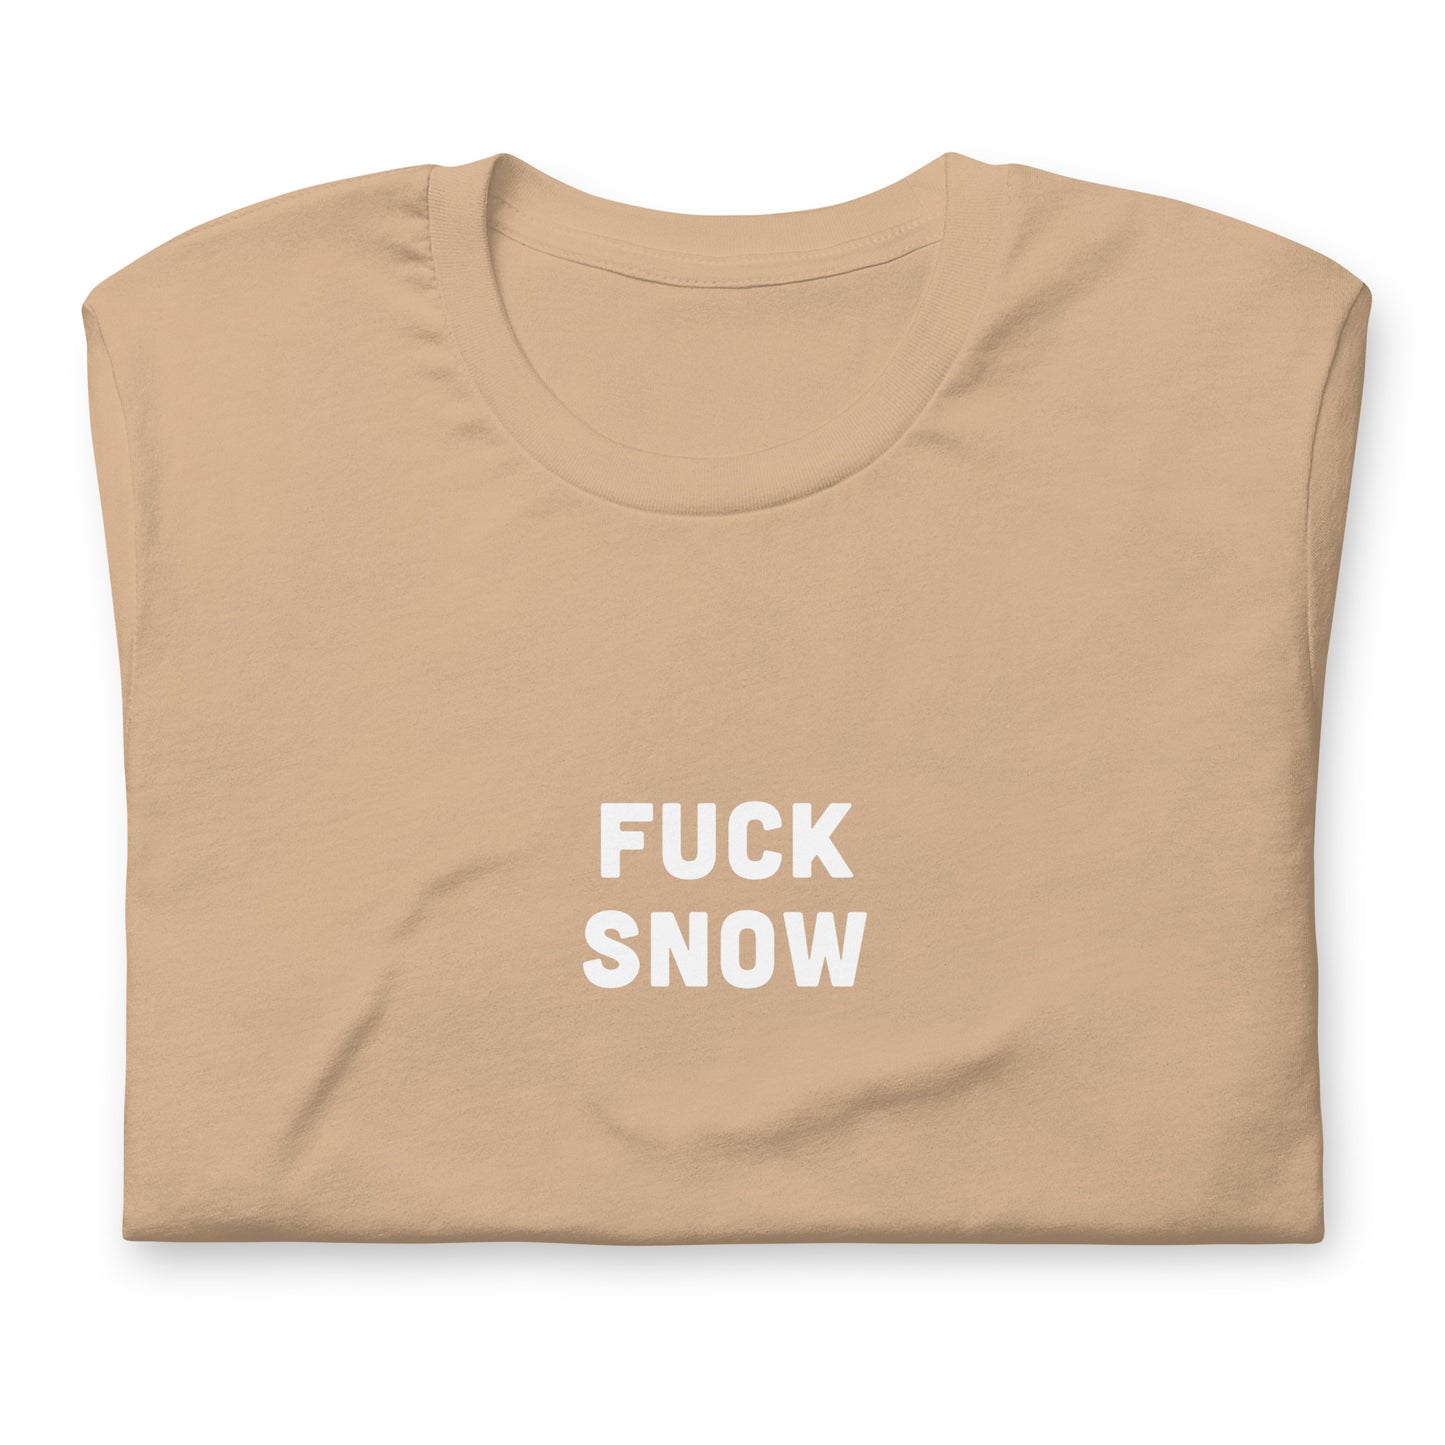 Fuck Snow T-Shirt Size 2XL Color Forest